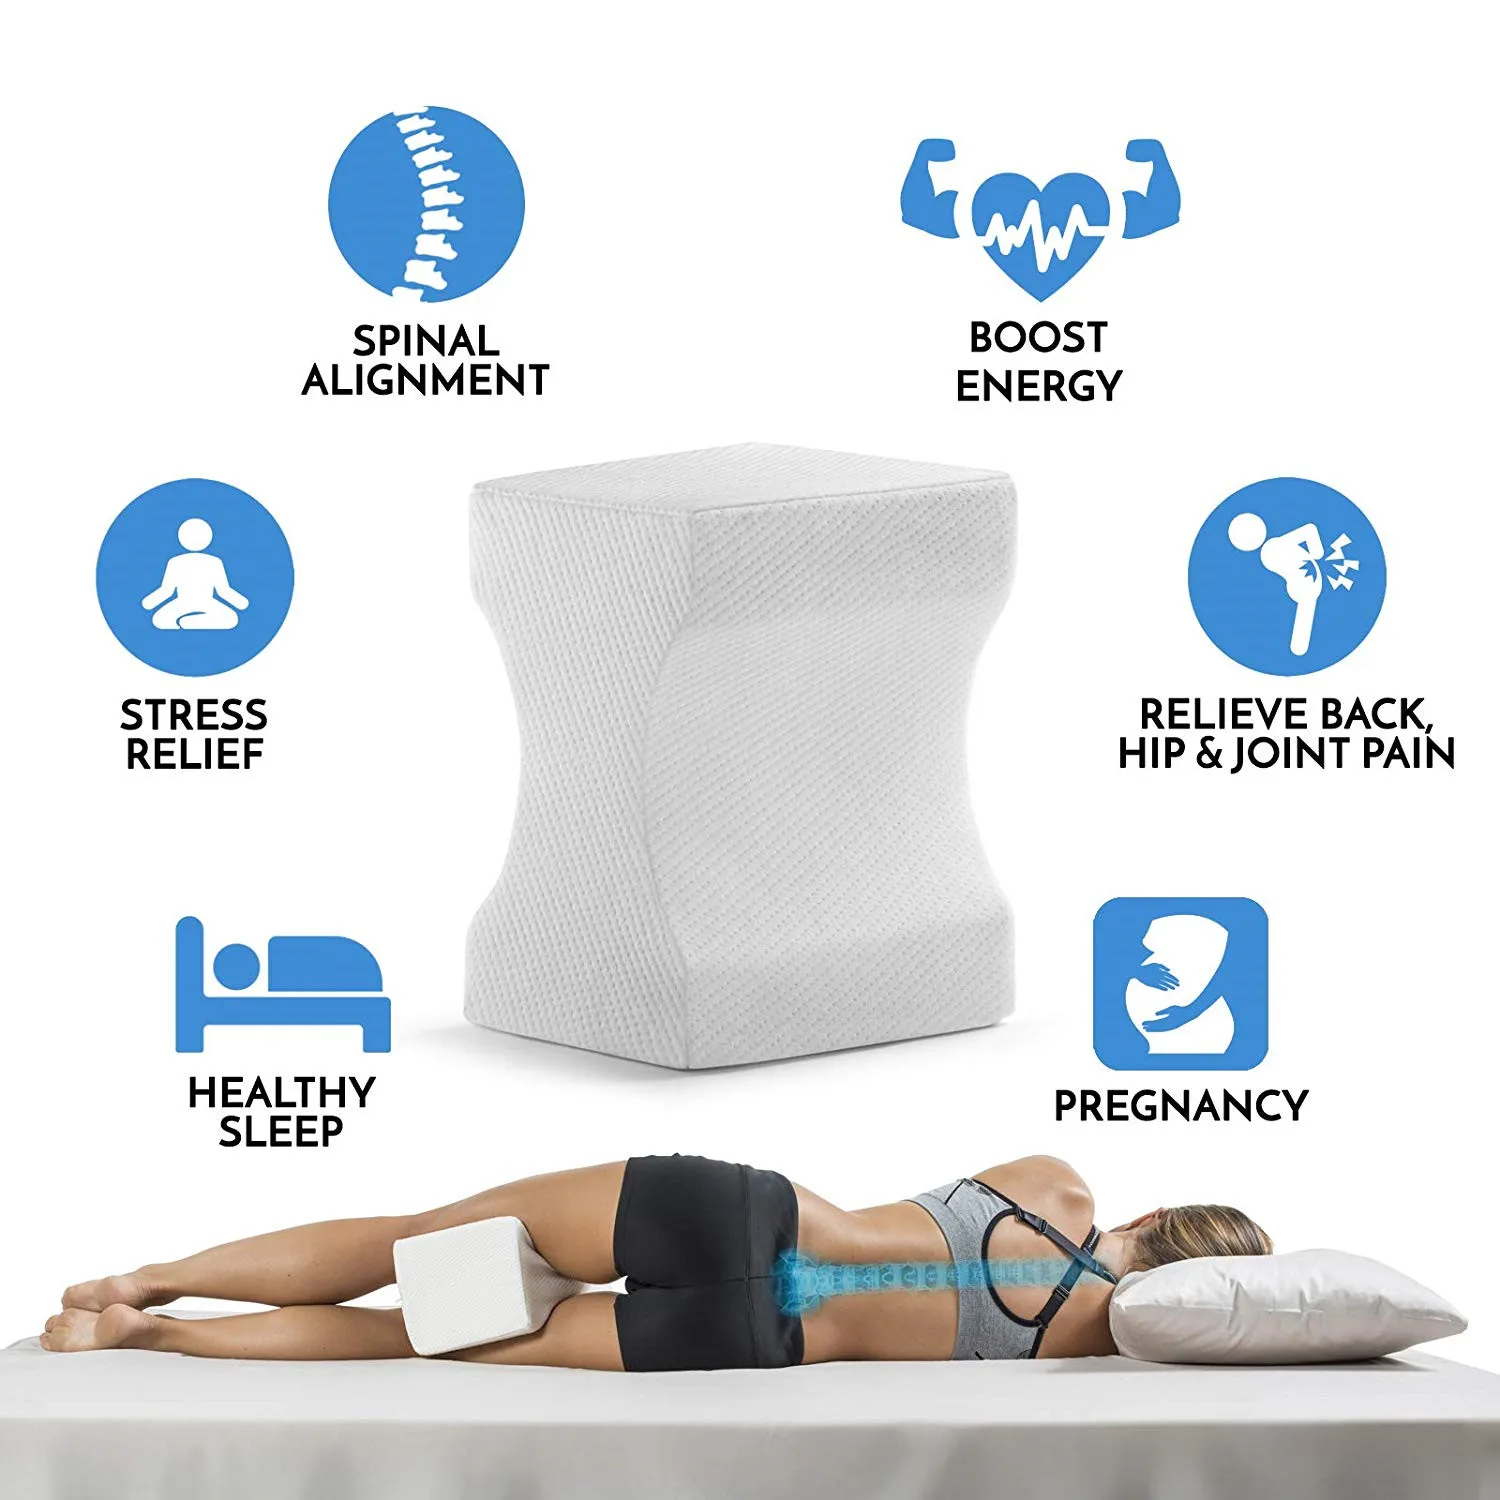 Memory Foam Knee Leg Pillow Bed Cushion Wedge Pressure Relief Sleep Support Aid 